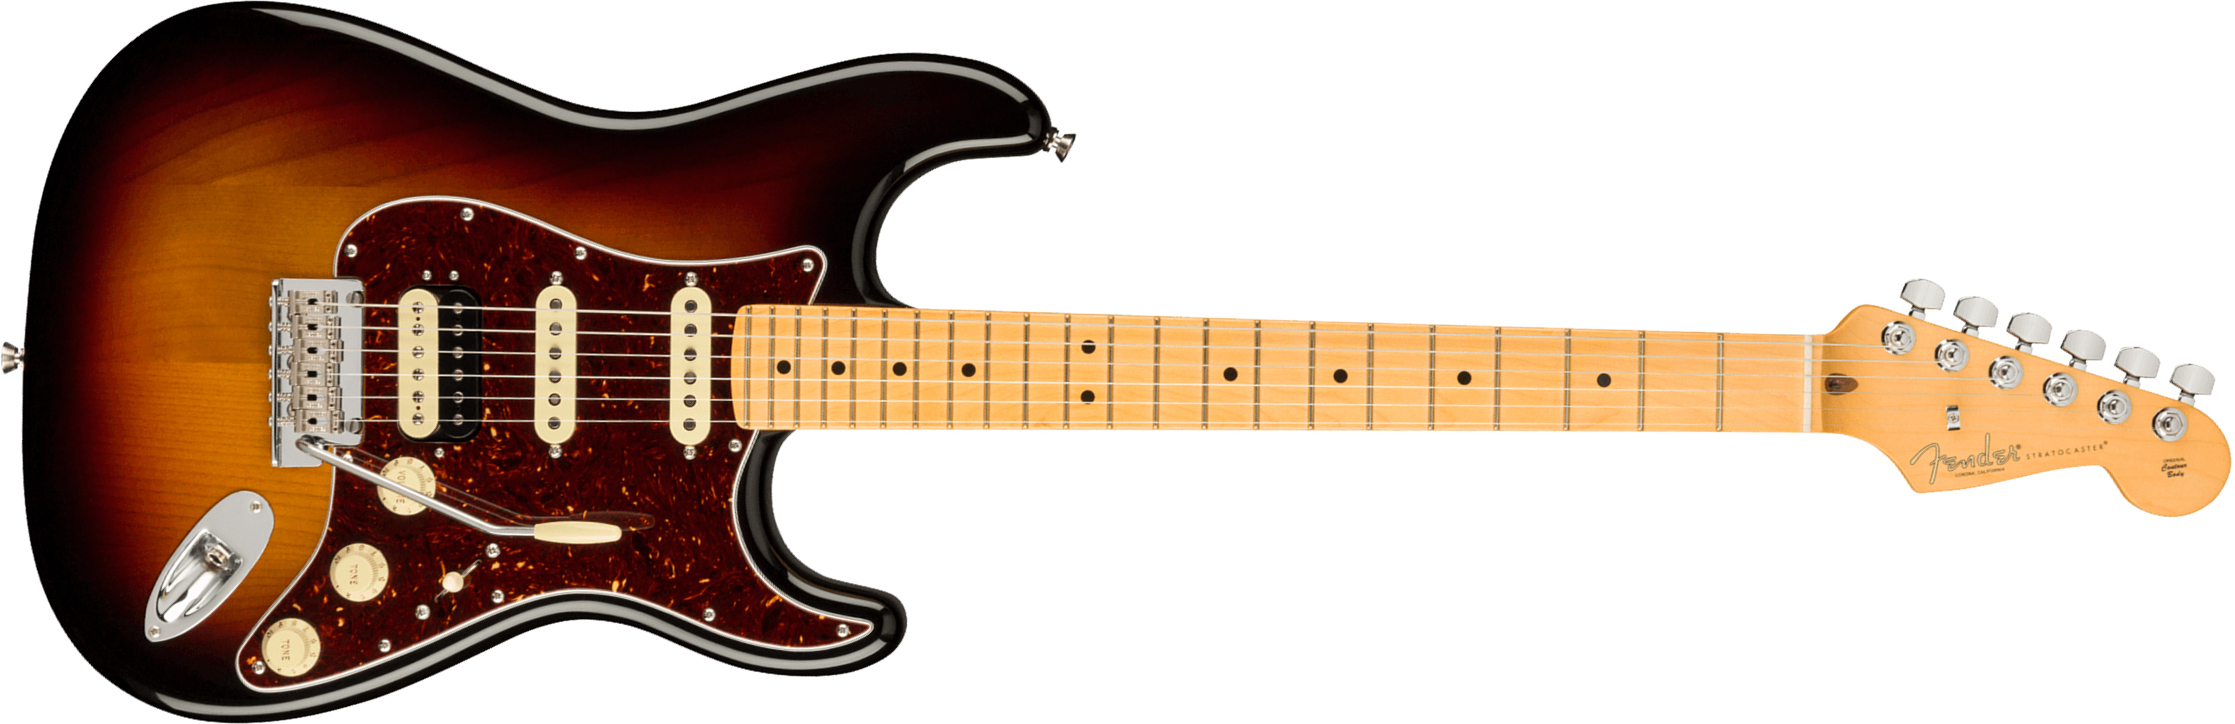 Fender Strat American Professional Ii Hss Usa Mn - 3-color Sunburst - Str shape electric guitar - Main picture